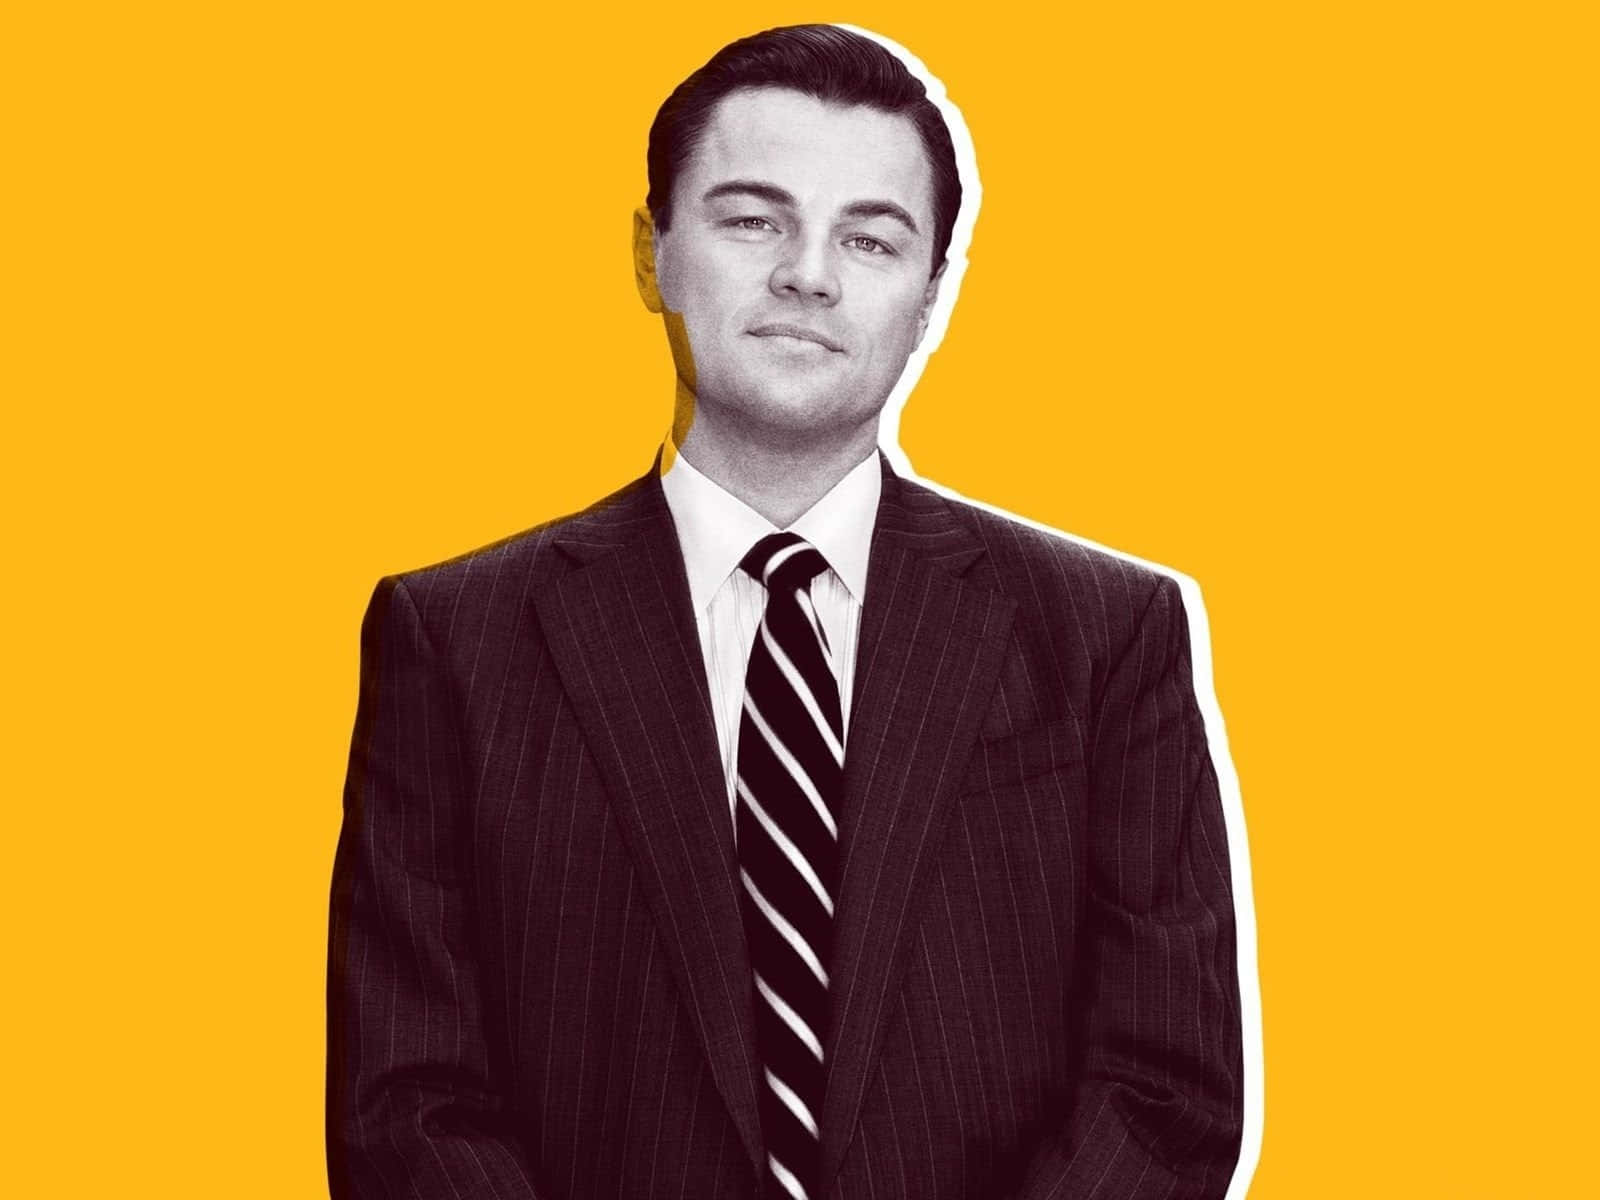 Leonardo DiCaprio as rogue trader Jordan Belfort in Martin Scorsese's Academy Award nominated movie, The Wolf of Wall Street. Wallpaper